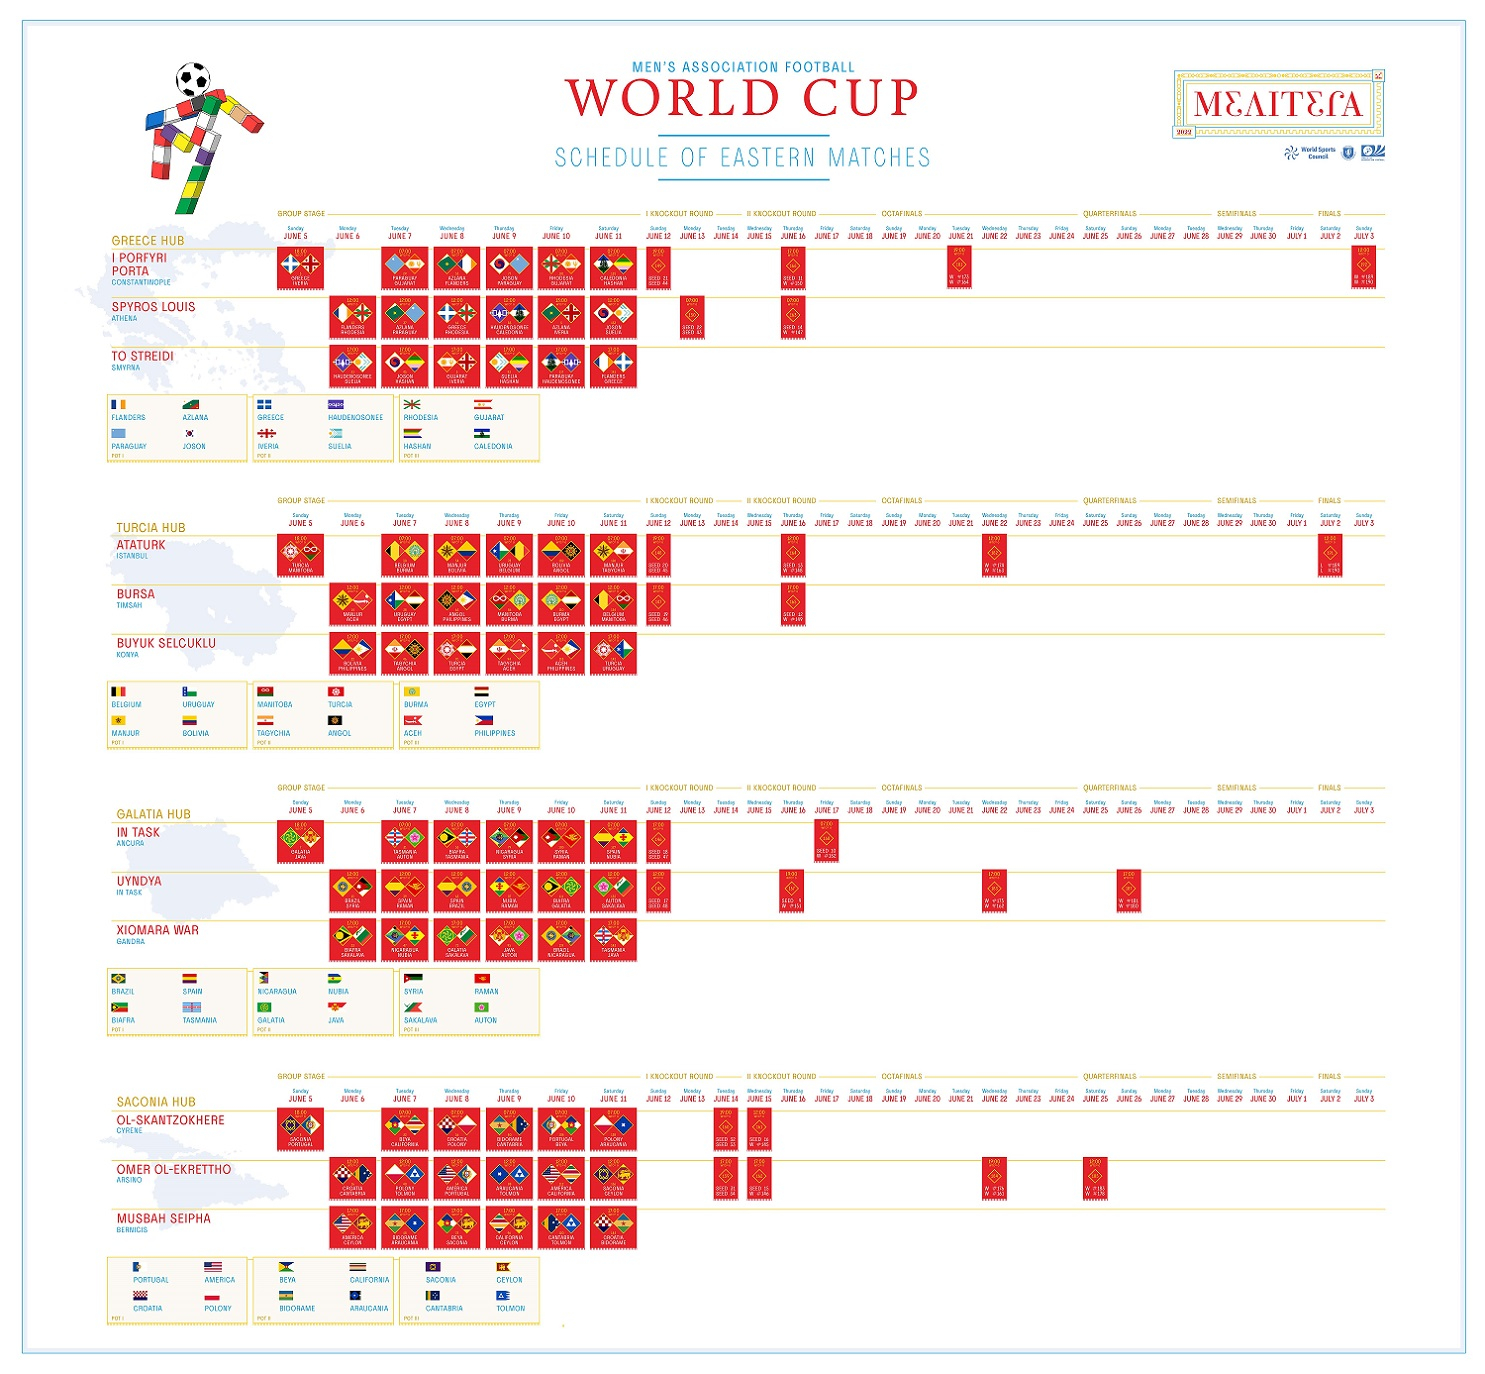 WorldCup_Schedule_Eastern Matches_AH.jpg